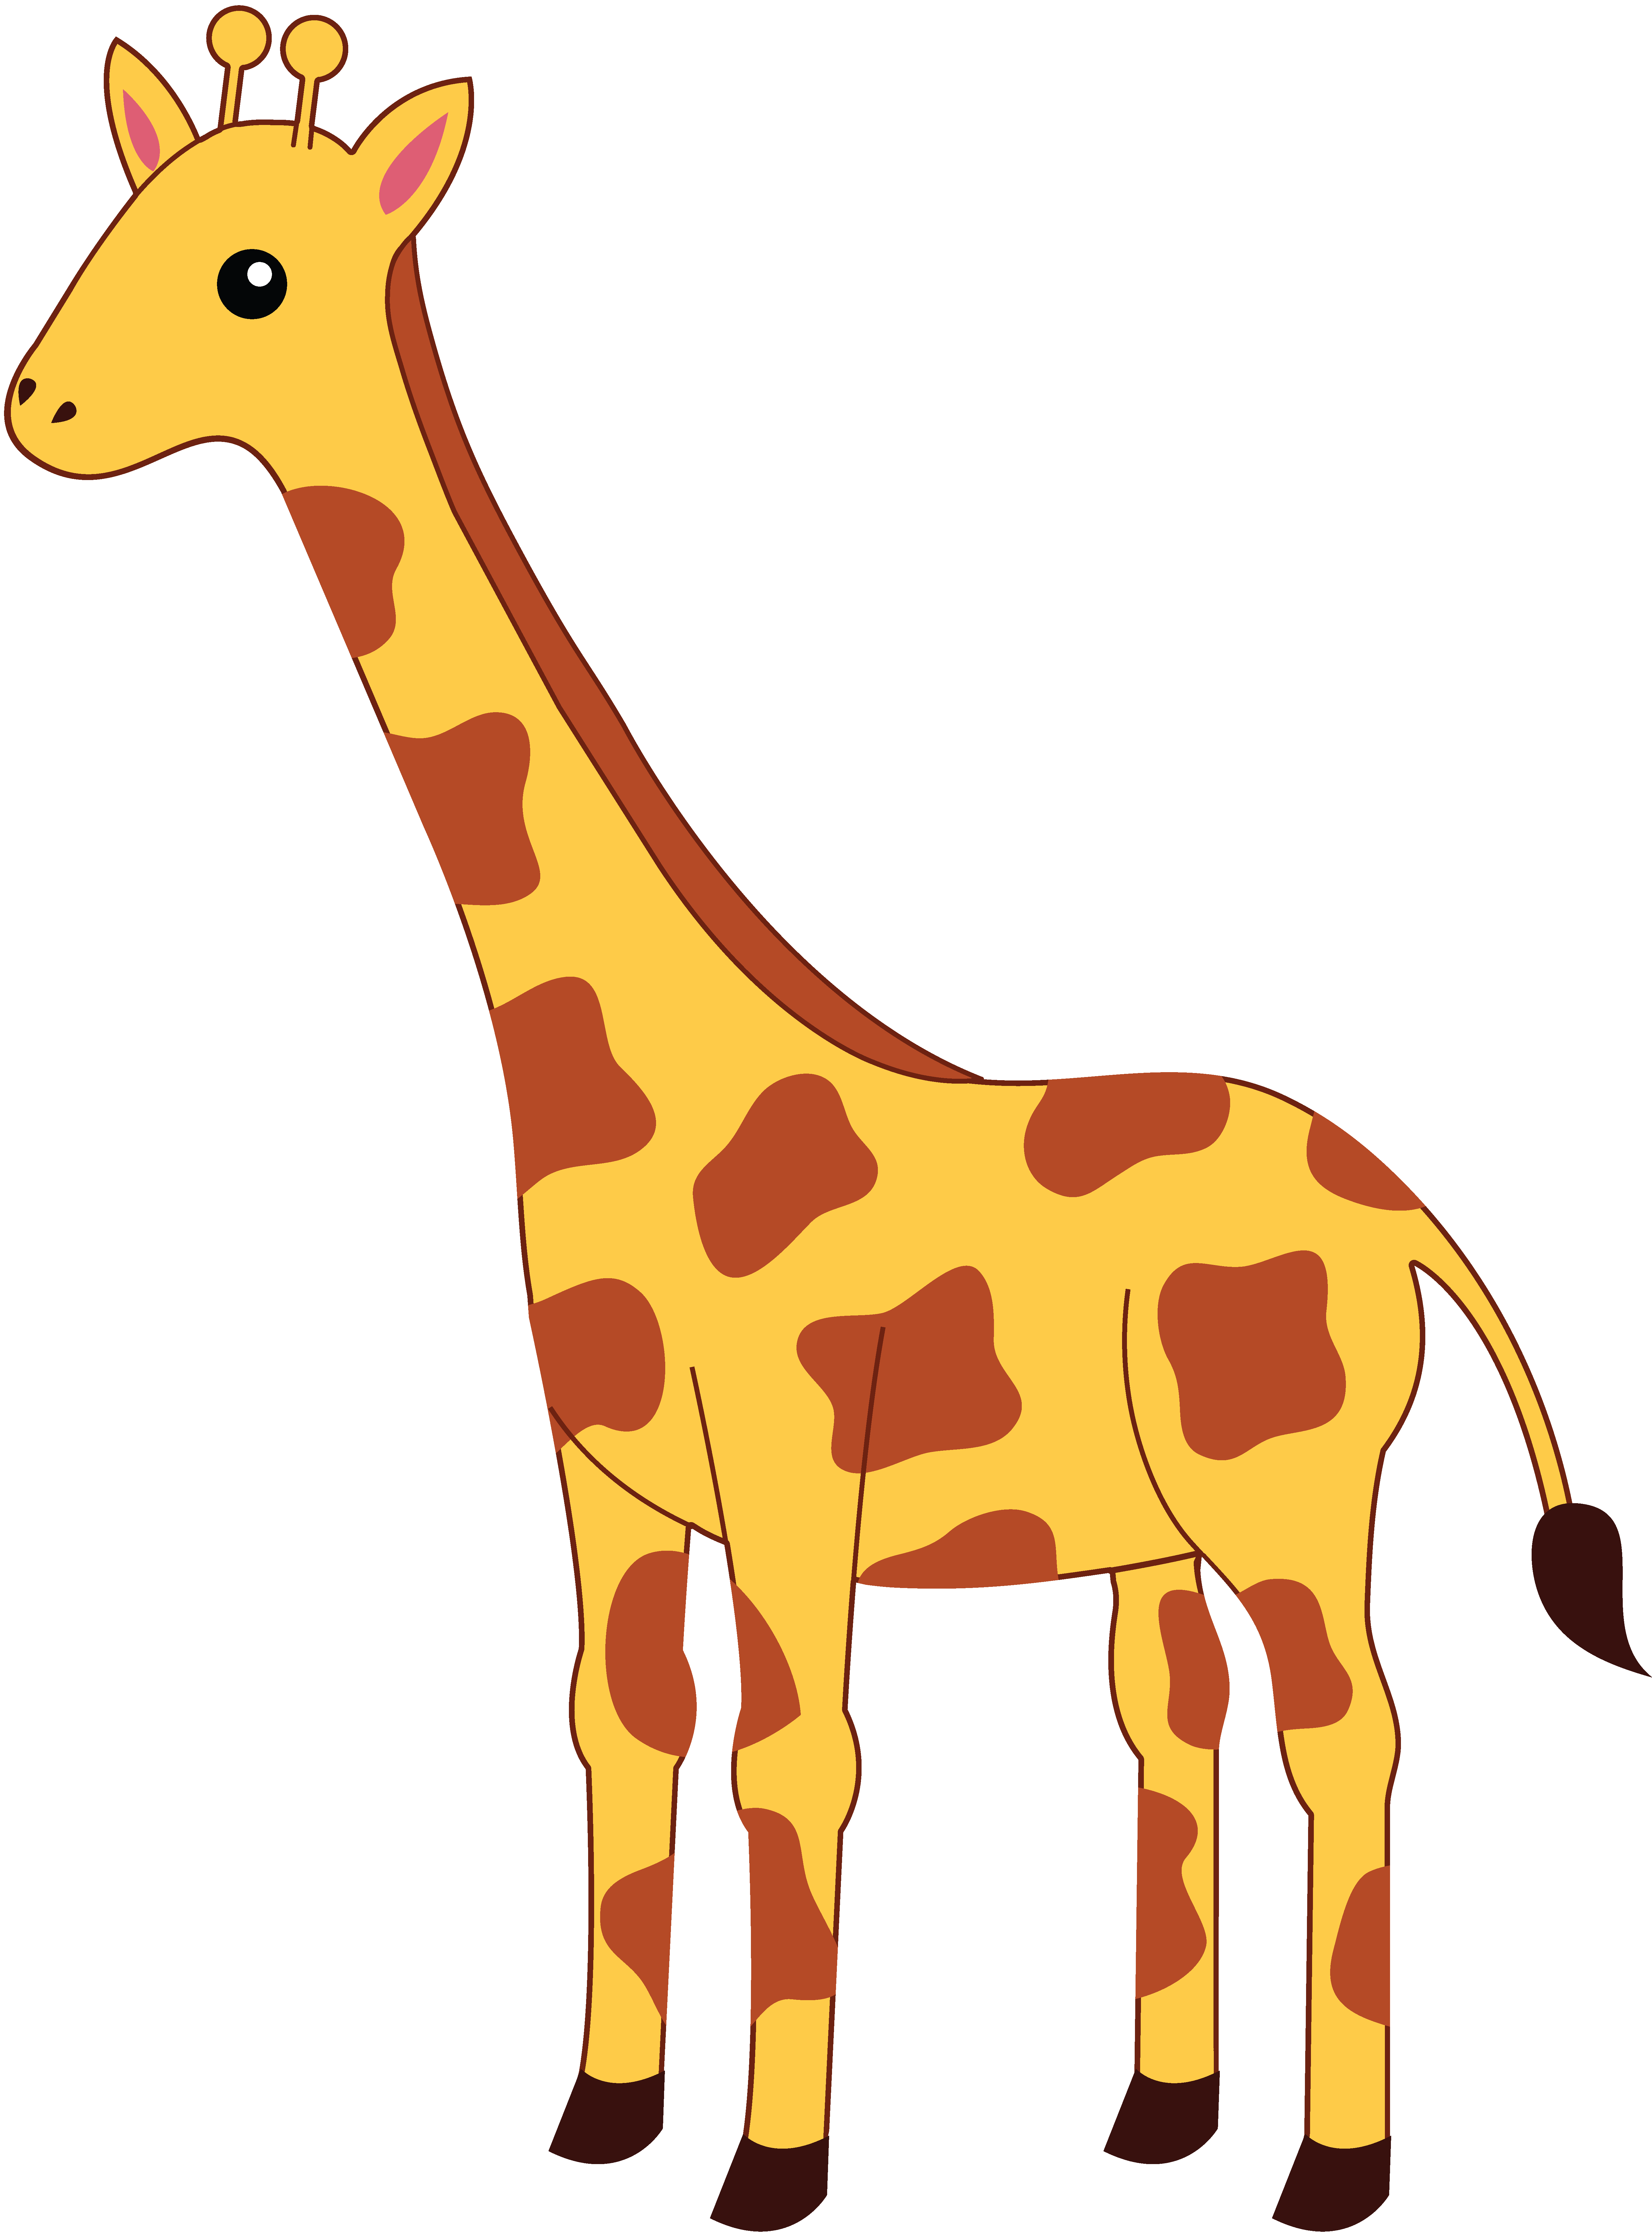 Valentine clipart giraffe. Simple outline cute applique